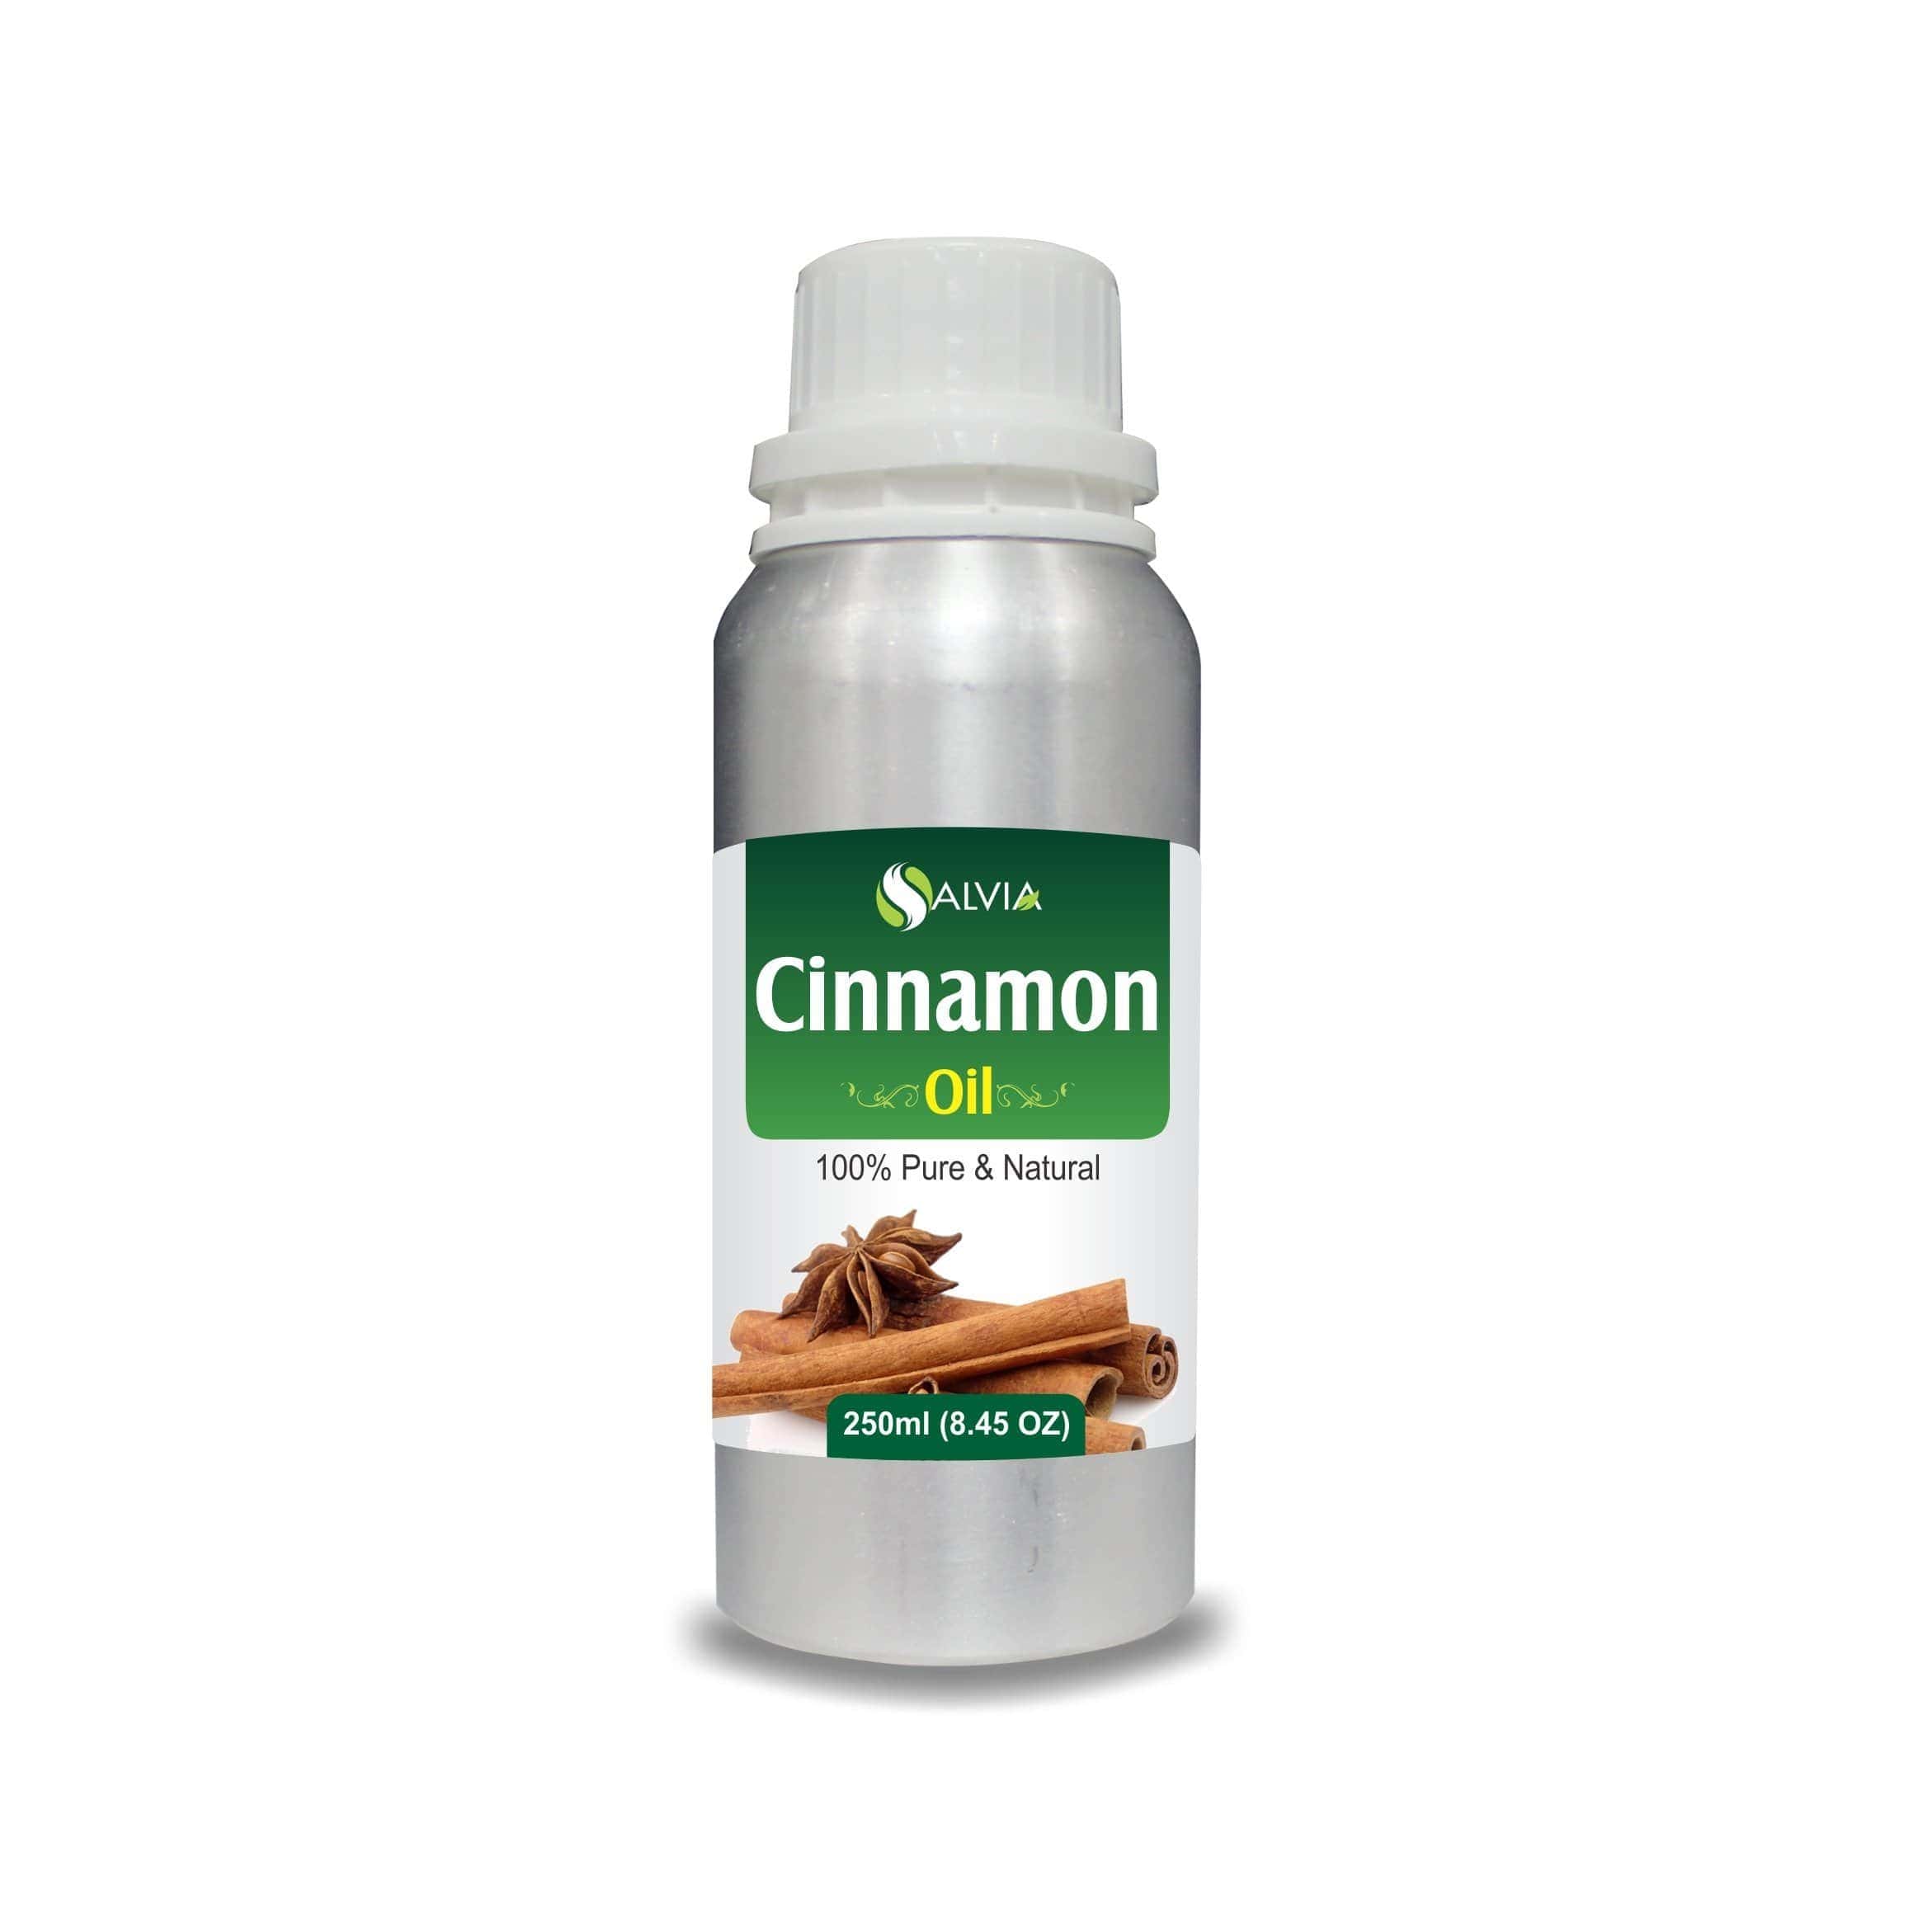 cinnamon oil for skin